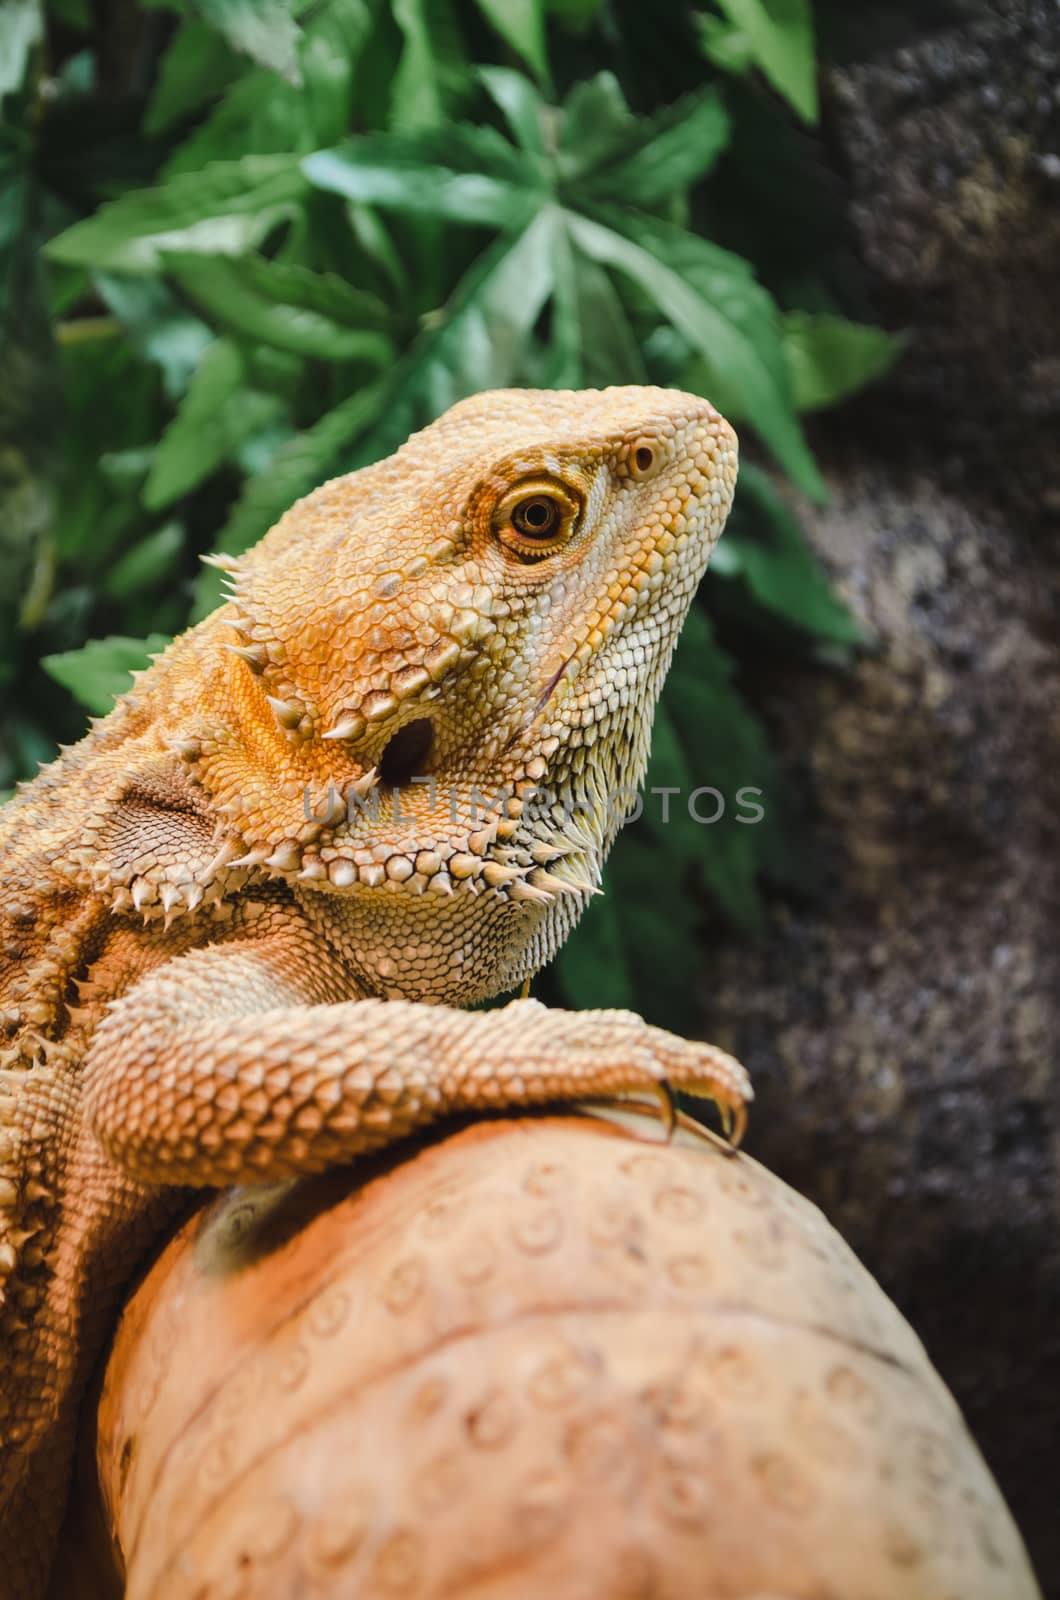 bearded dragon basking on a log in its vivarium